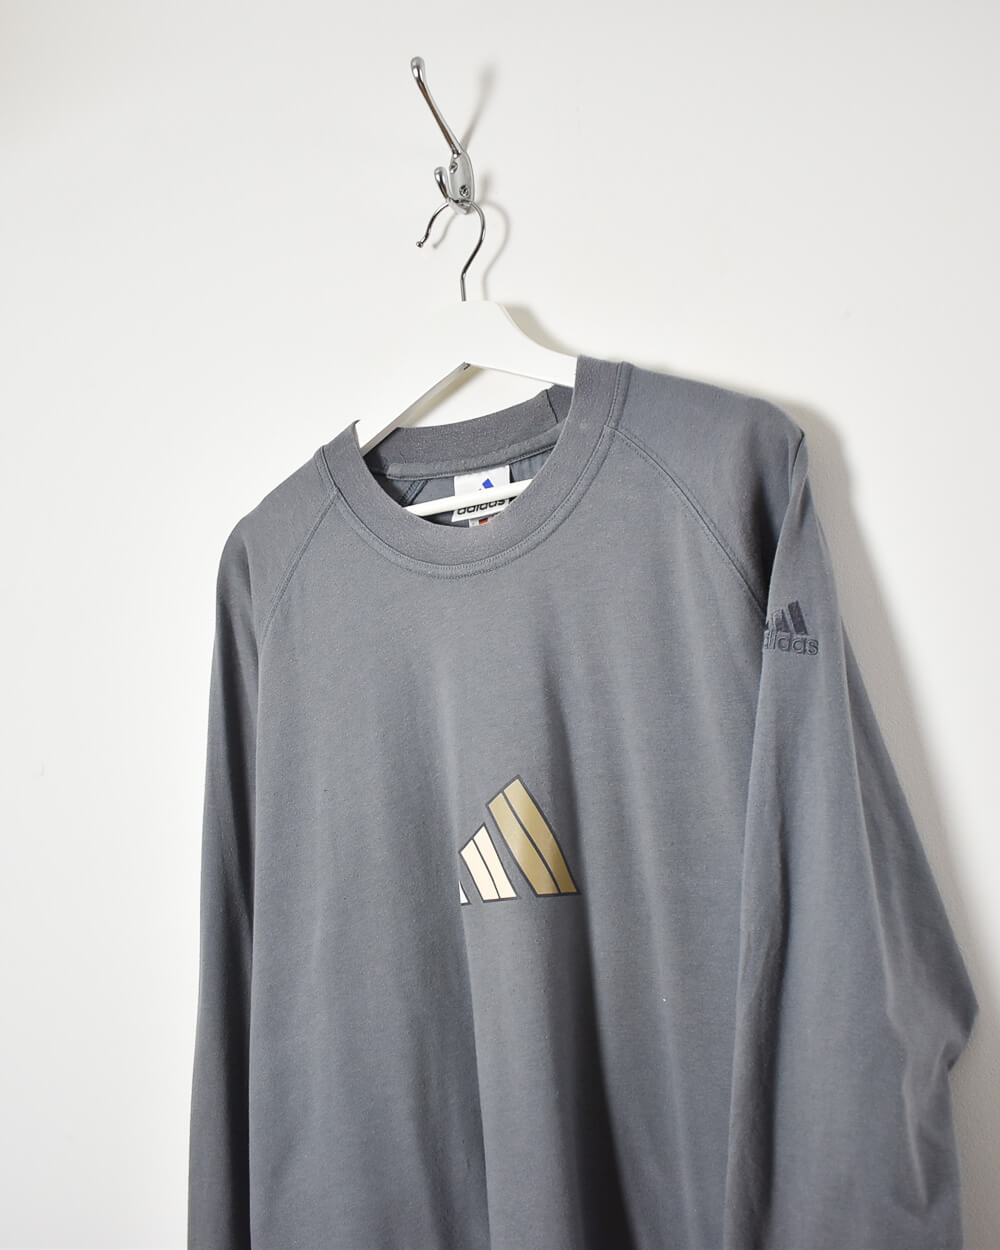 Grey Adidas Long Sleeved T-Shirt - Medium